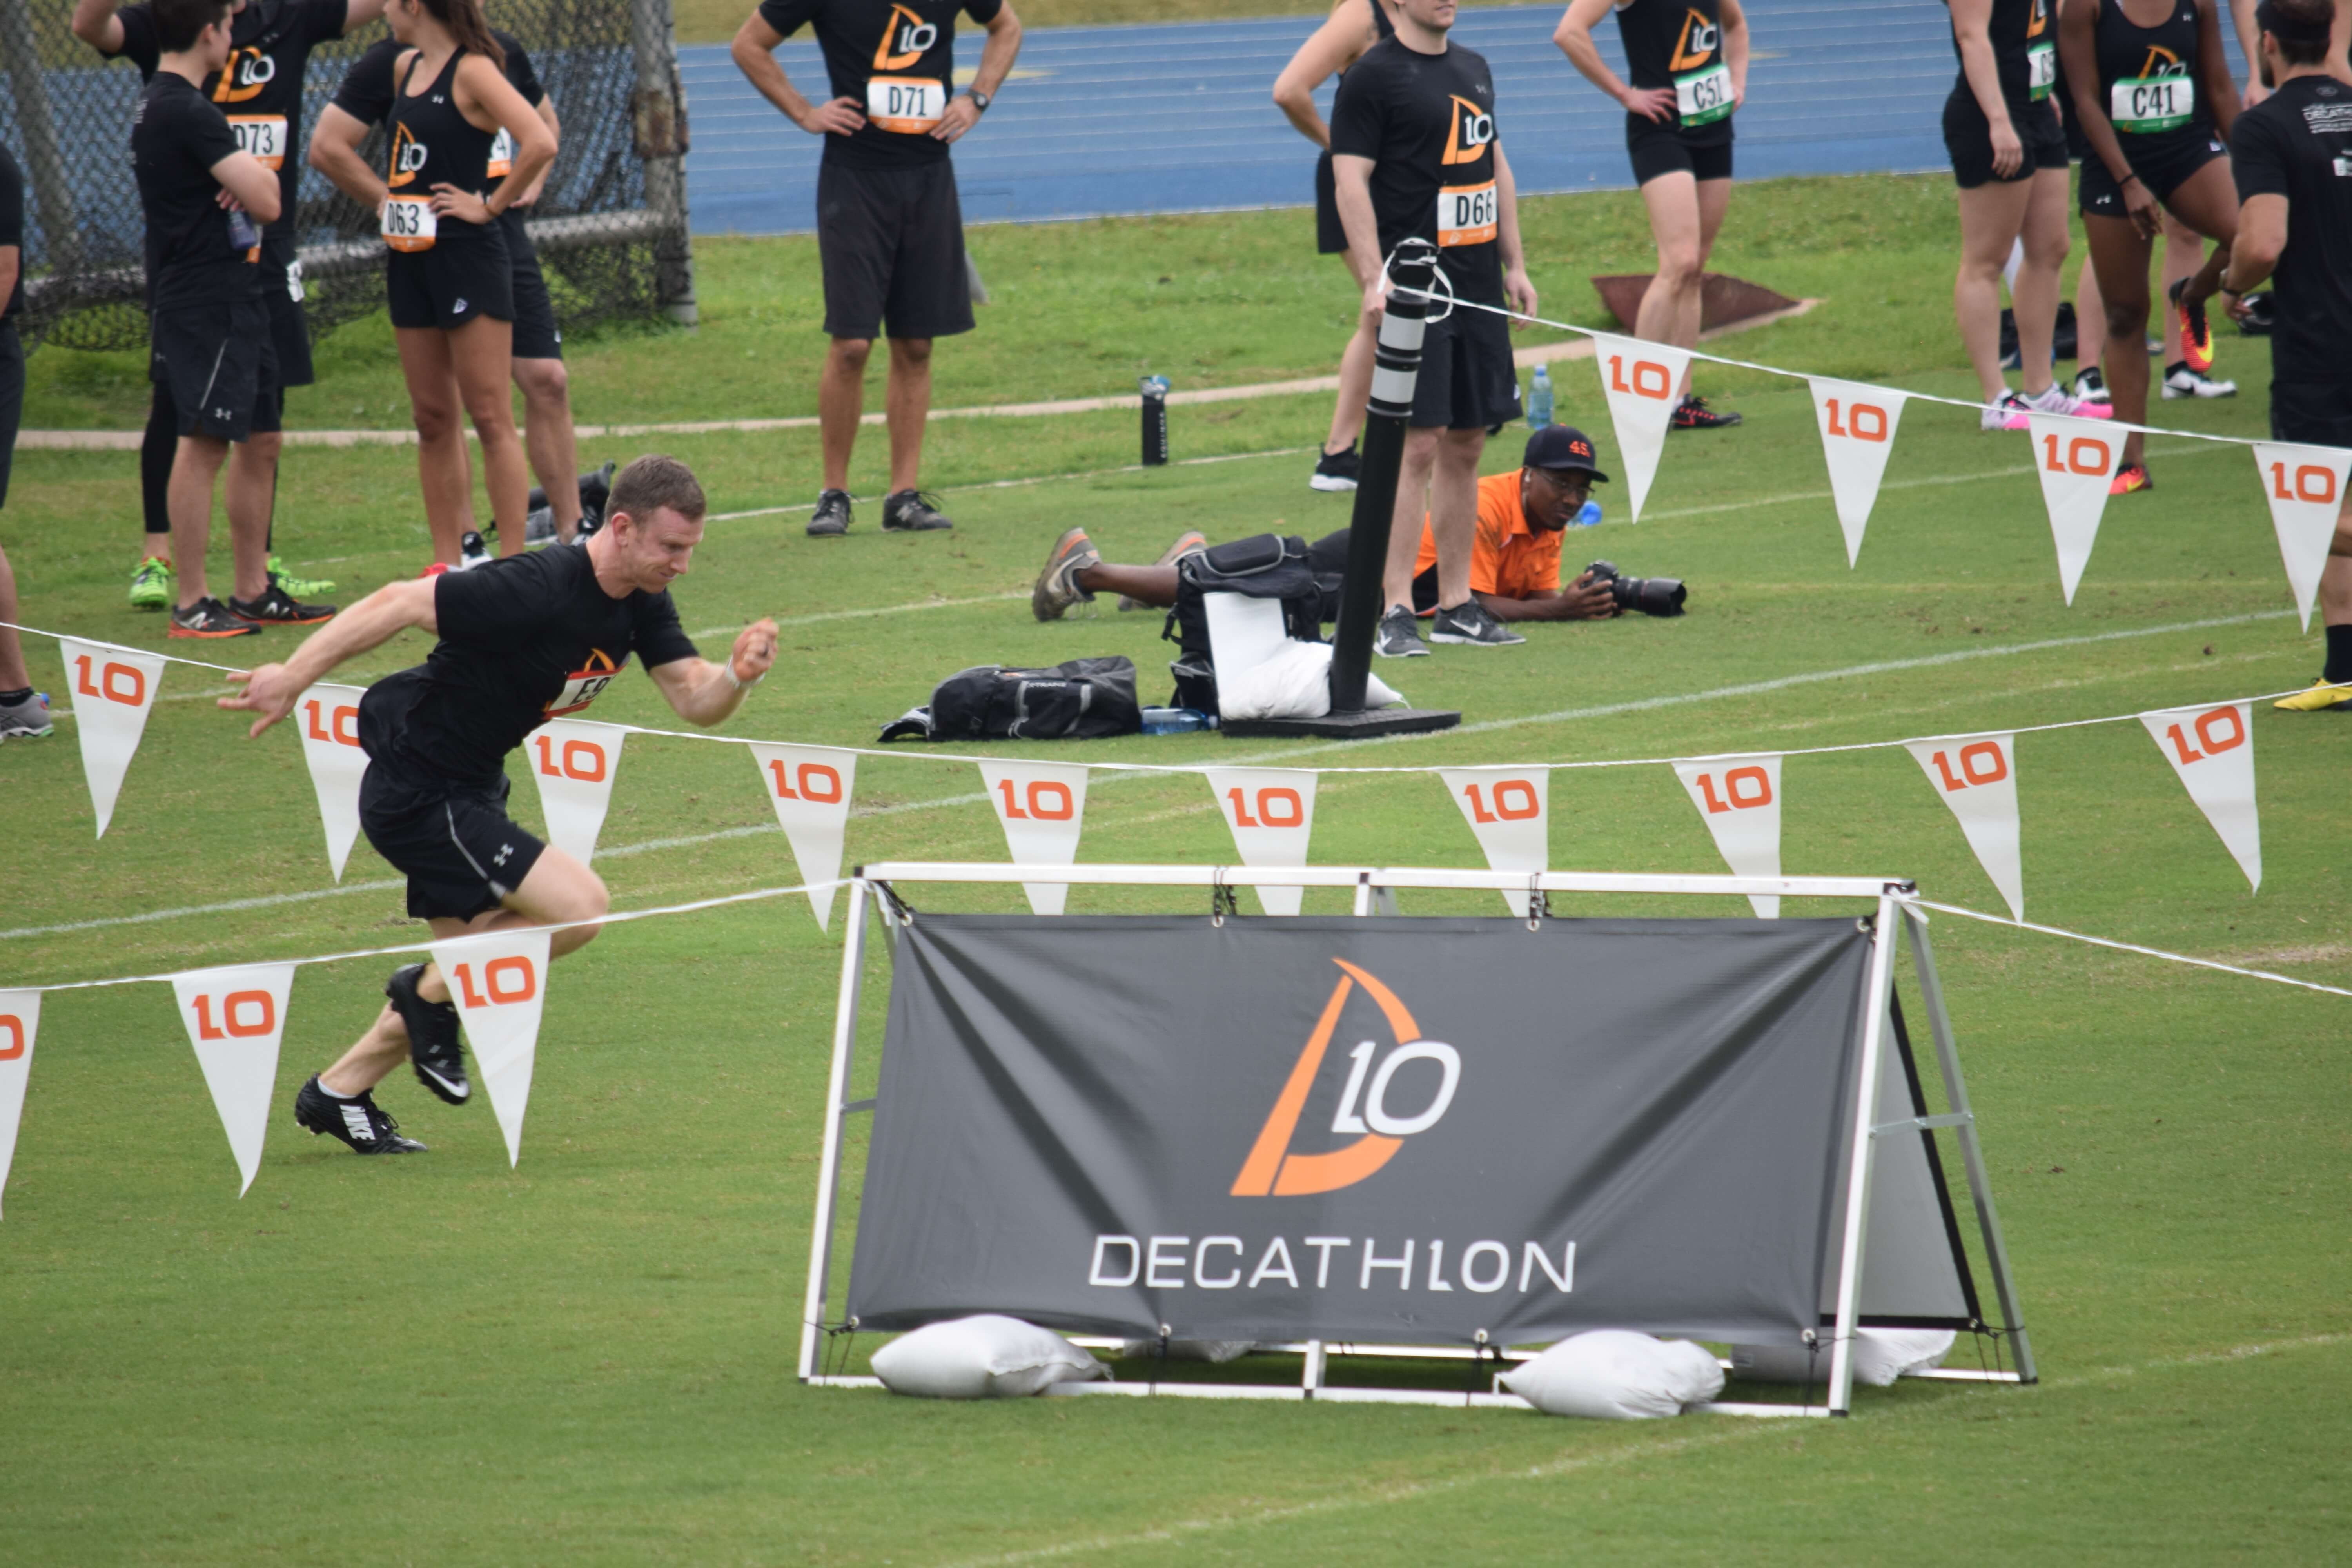 first event in decathlon